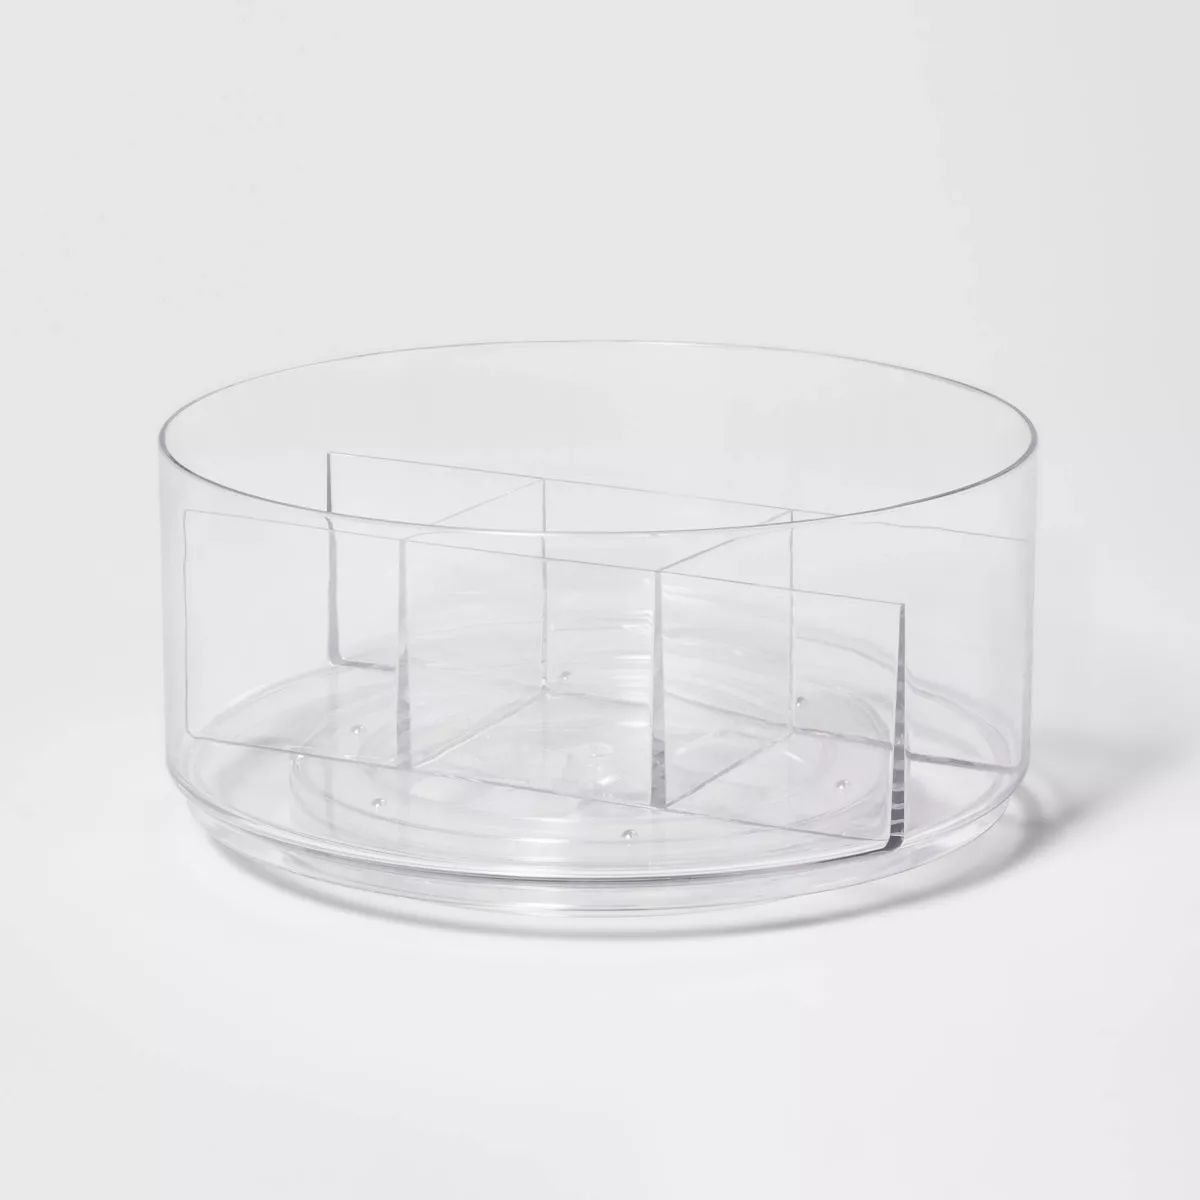 Bathroom Plastic Spinning Turntable Beauty Organizer Clear - Brightroom™ | Target